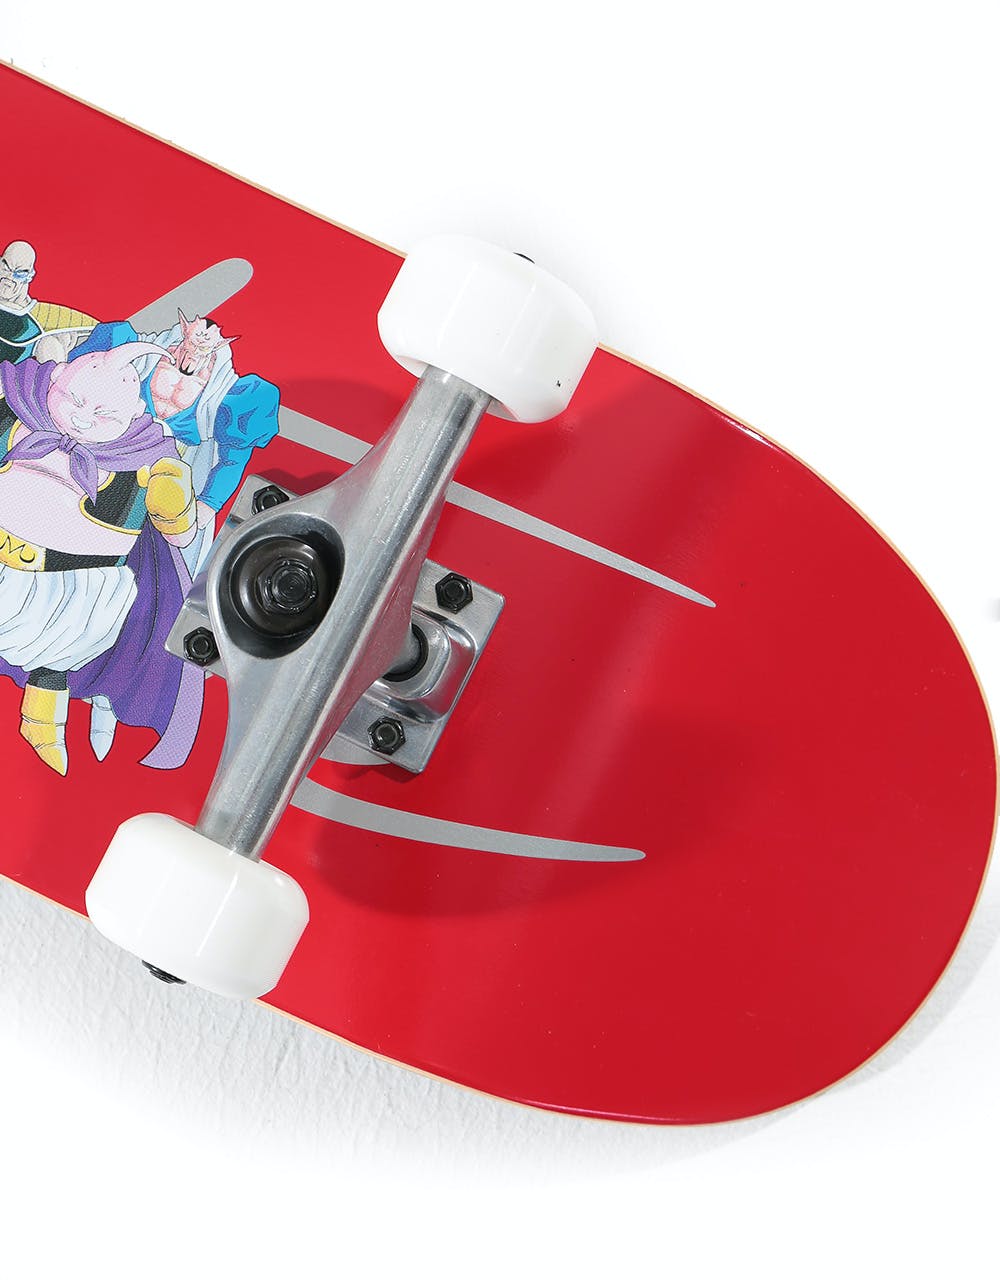 Primitive x Dragon Ball Z Neuvo Villains Complete Skateboard - 7.75"